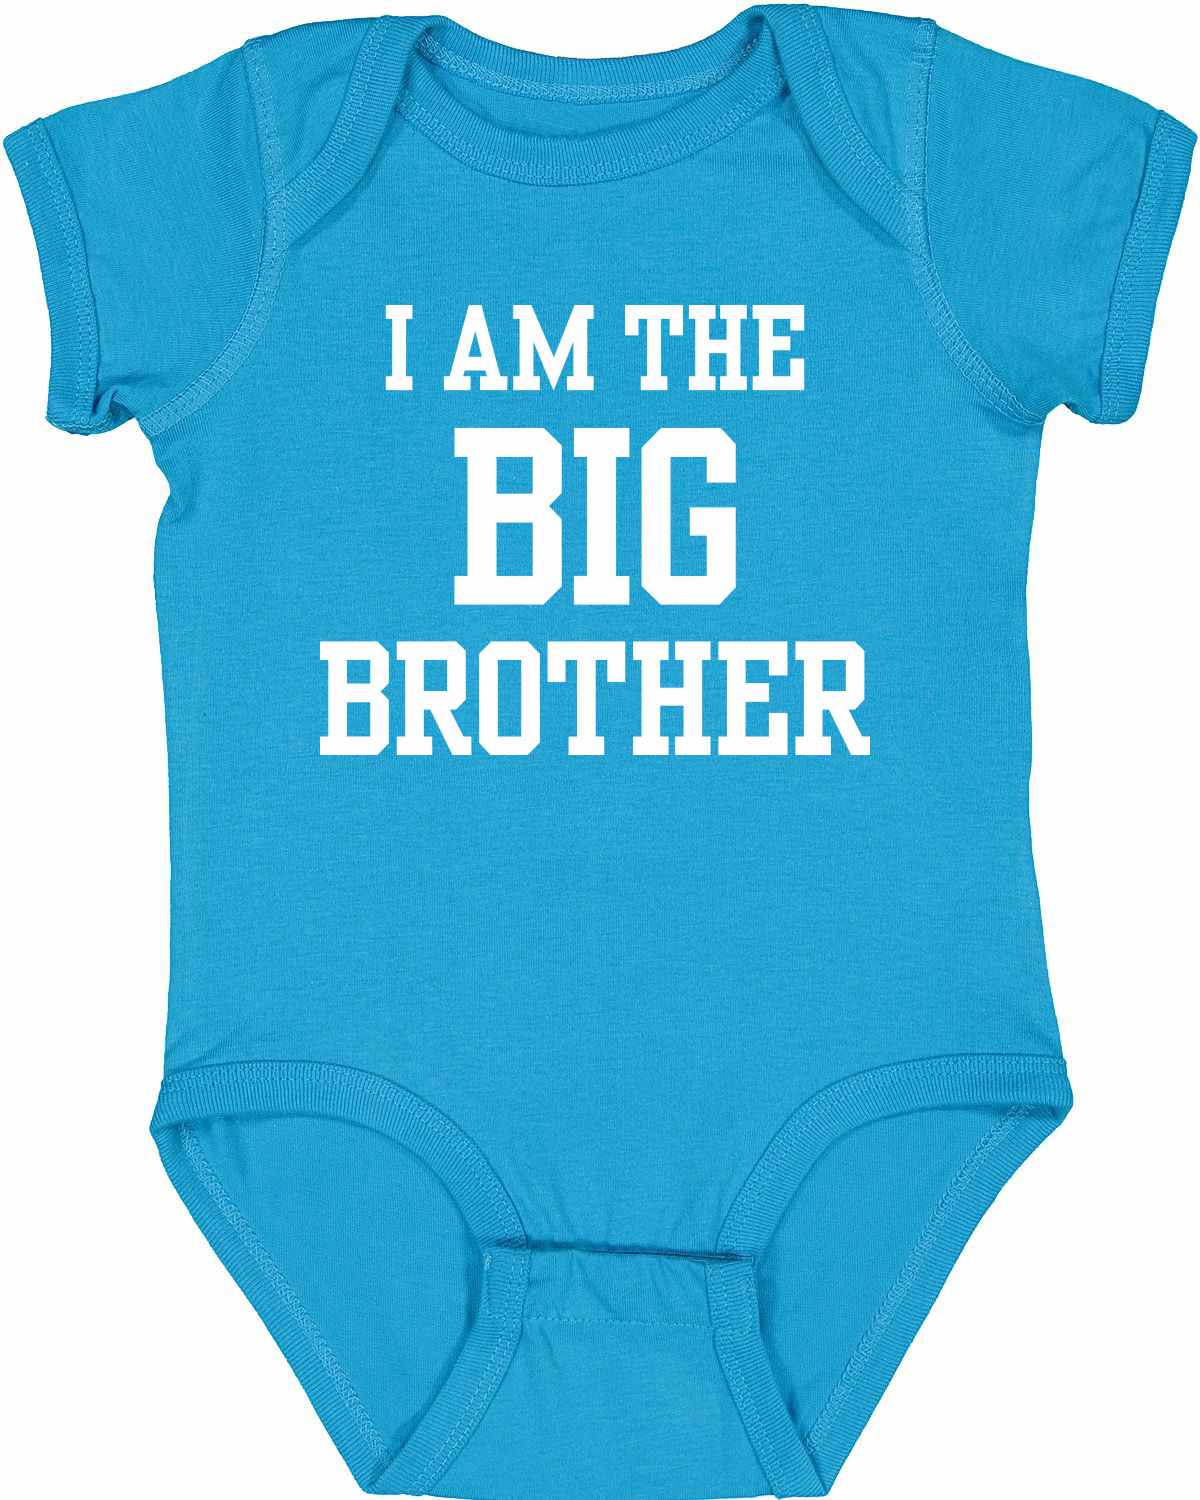 I AM The Big Brother Infant BodySuit